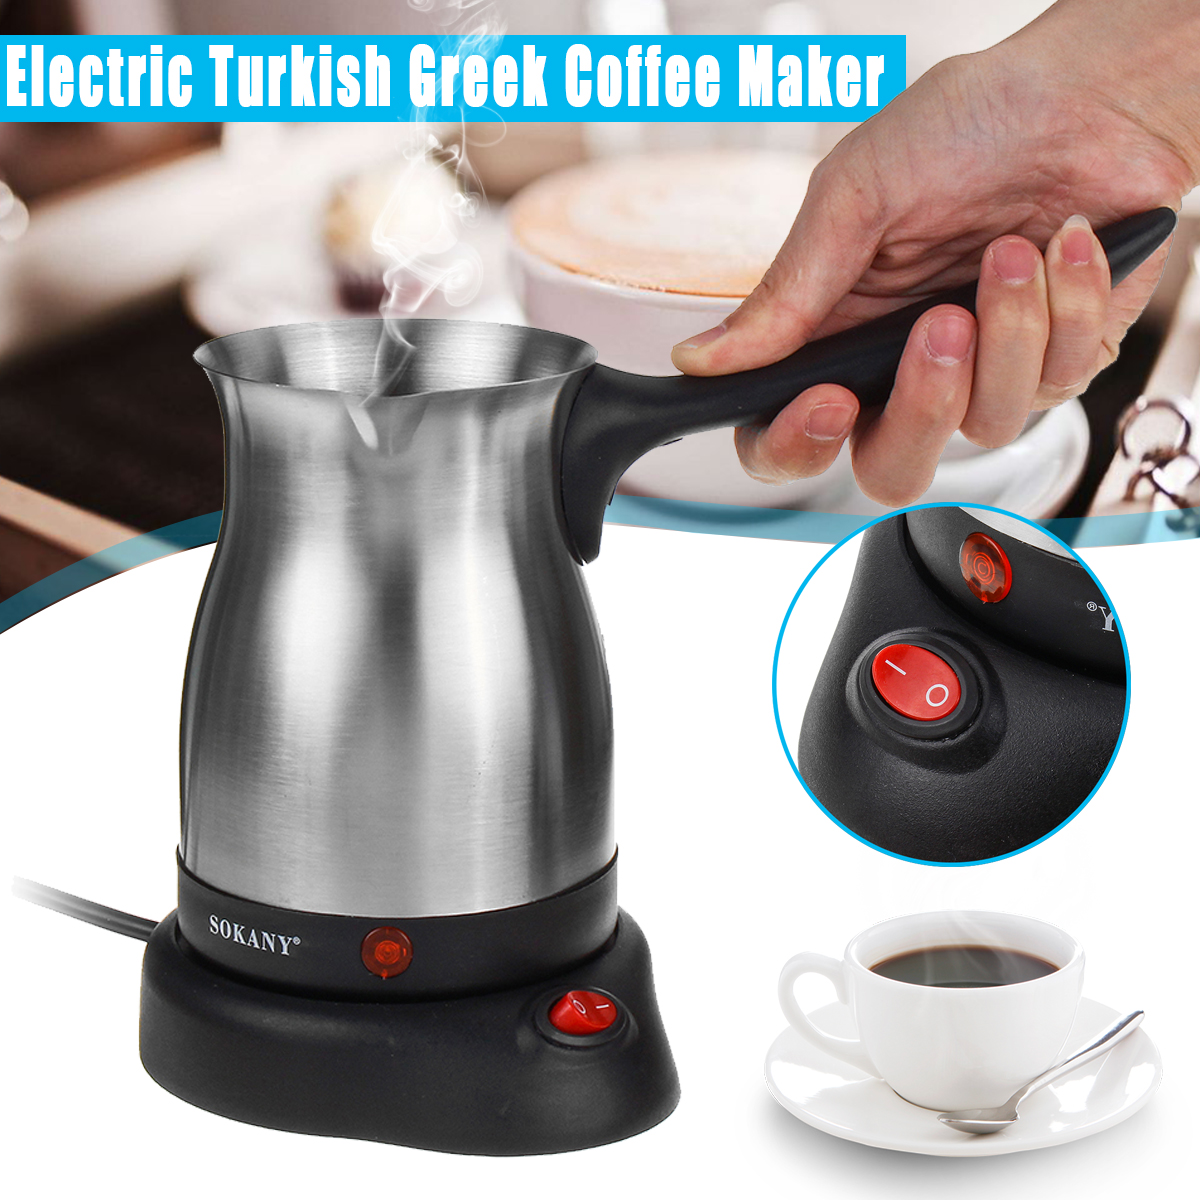 Stainless Steel Electric Turkish Greek Coffee Maker Machine Espresso Moka Pot 19